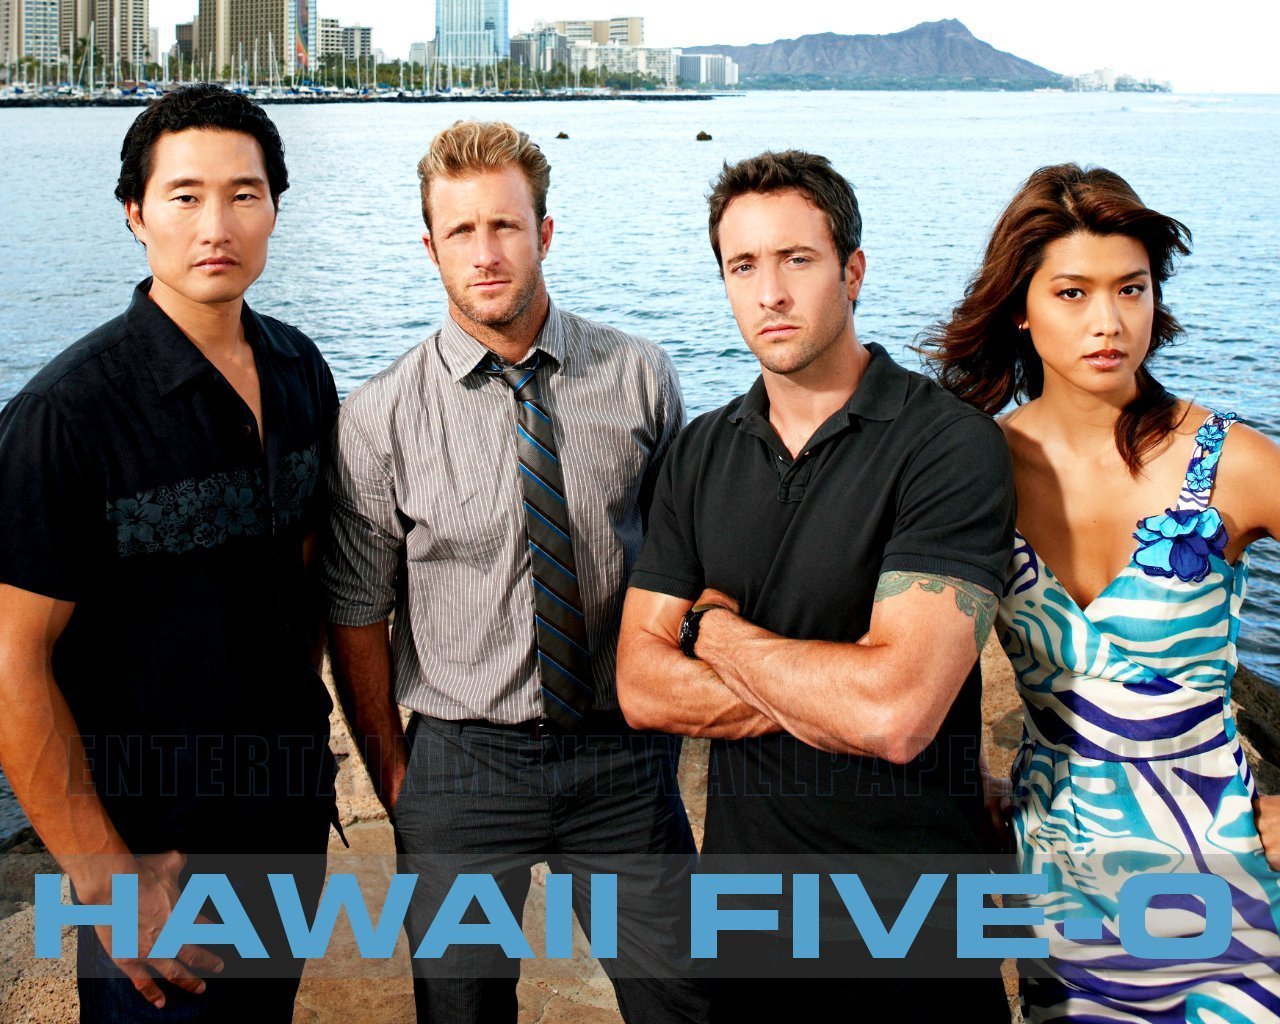 Hawaii Five- 0 - Hawaii Five-0 (2010) Wallpaper (20909256) - Fanpop